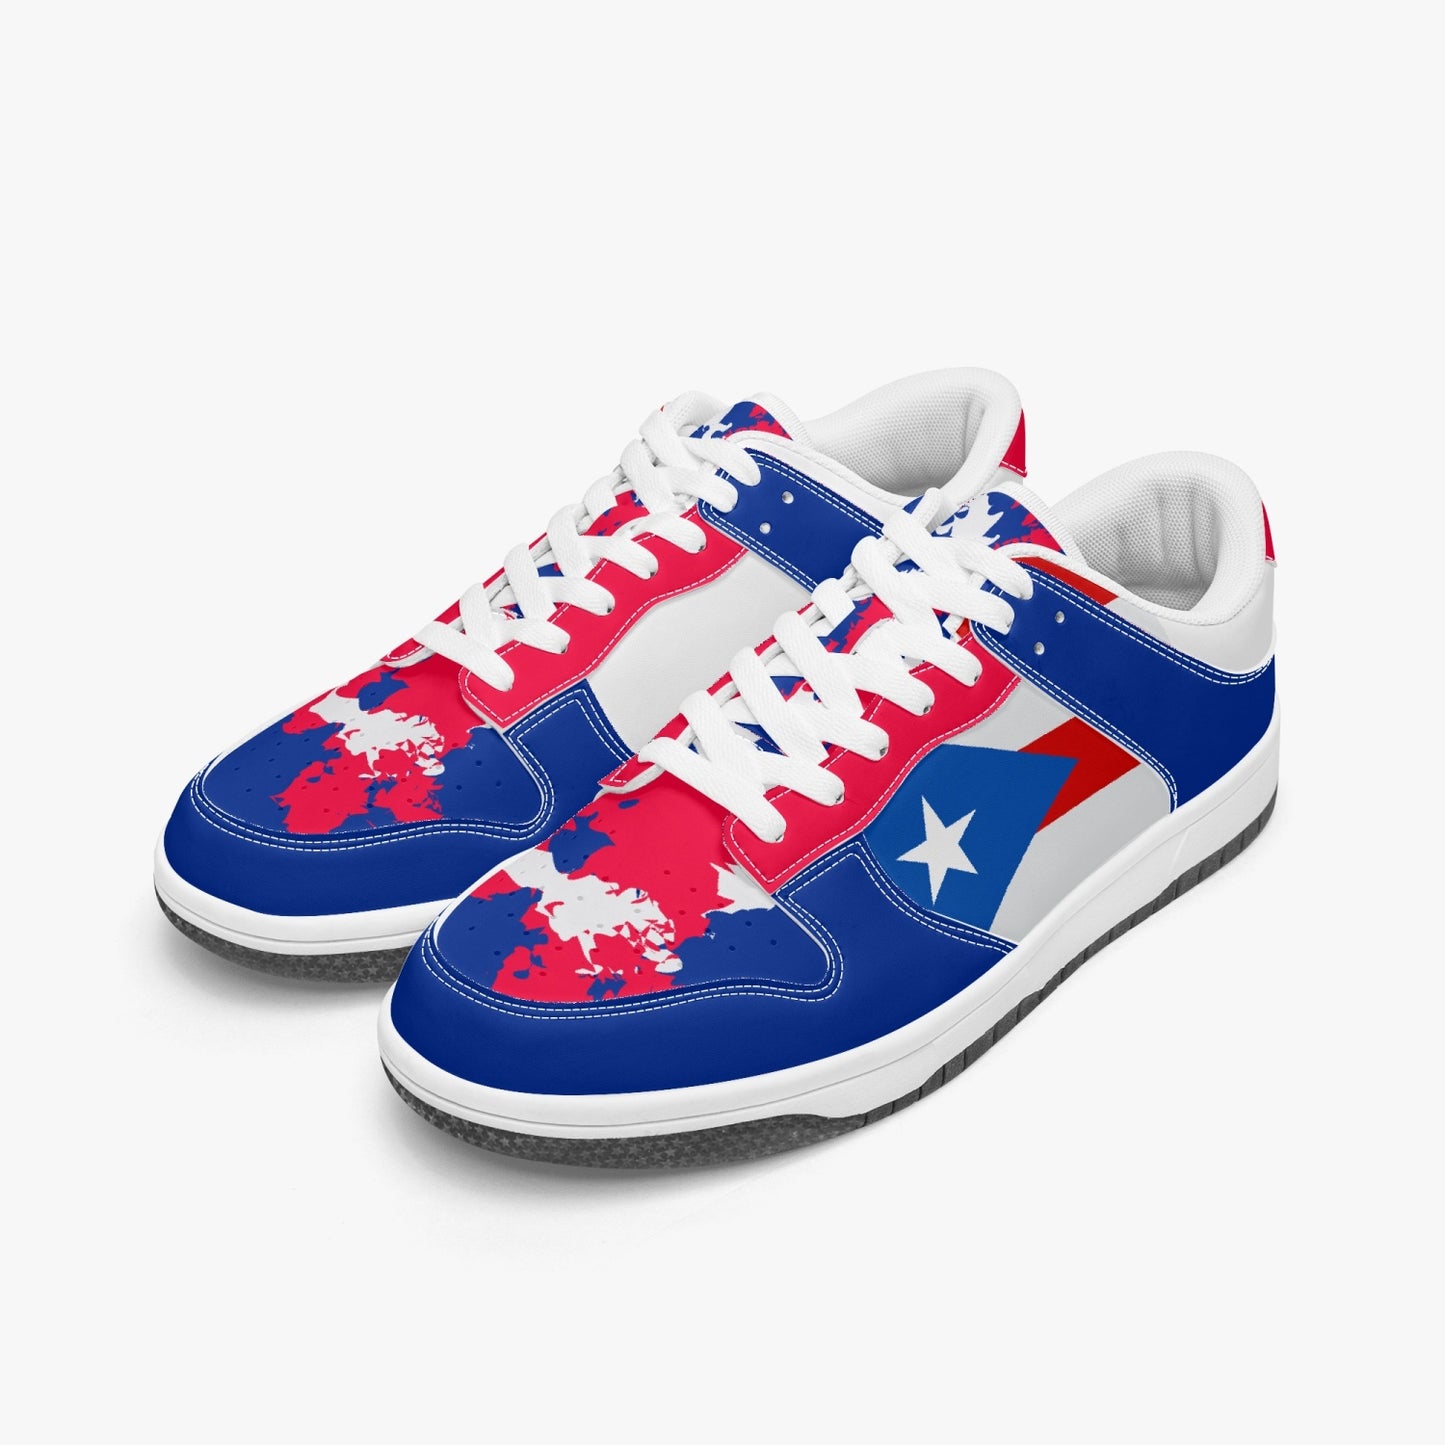 1Tweezy Puerto Rican Lows Sneakers